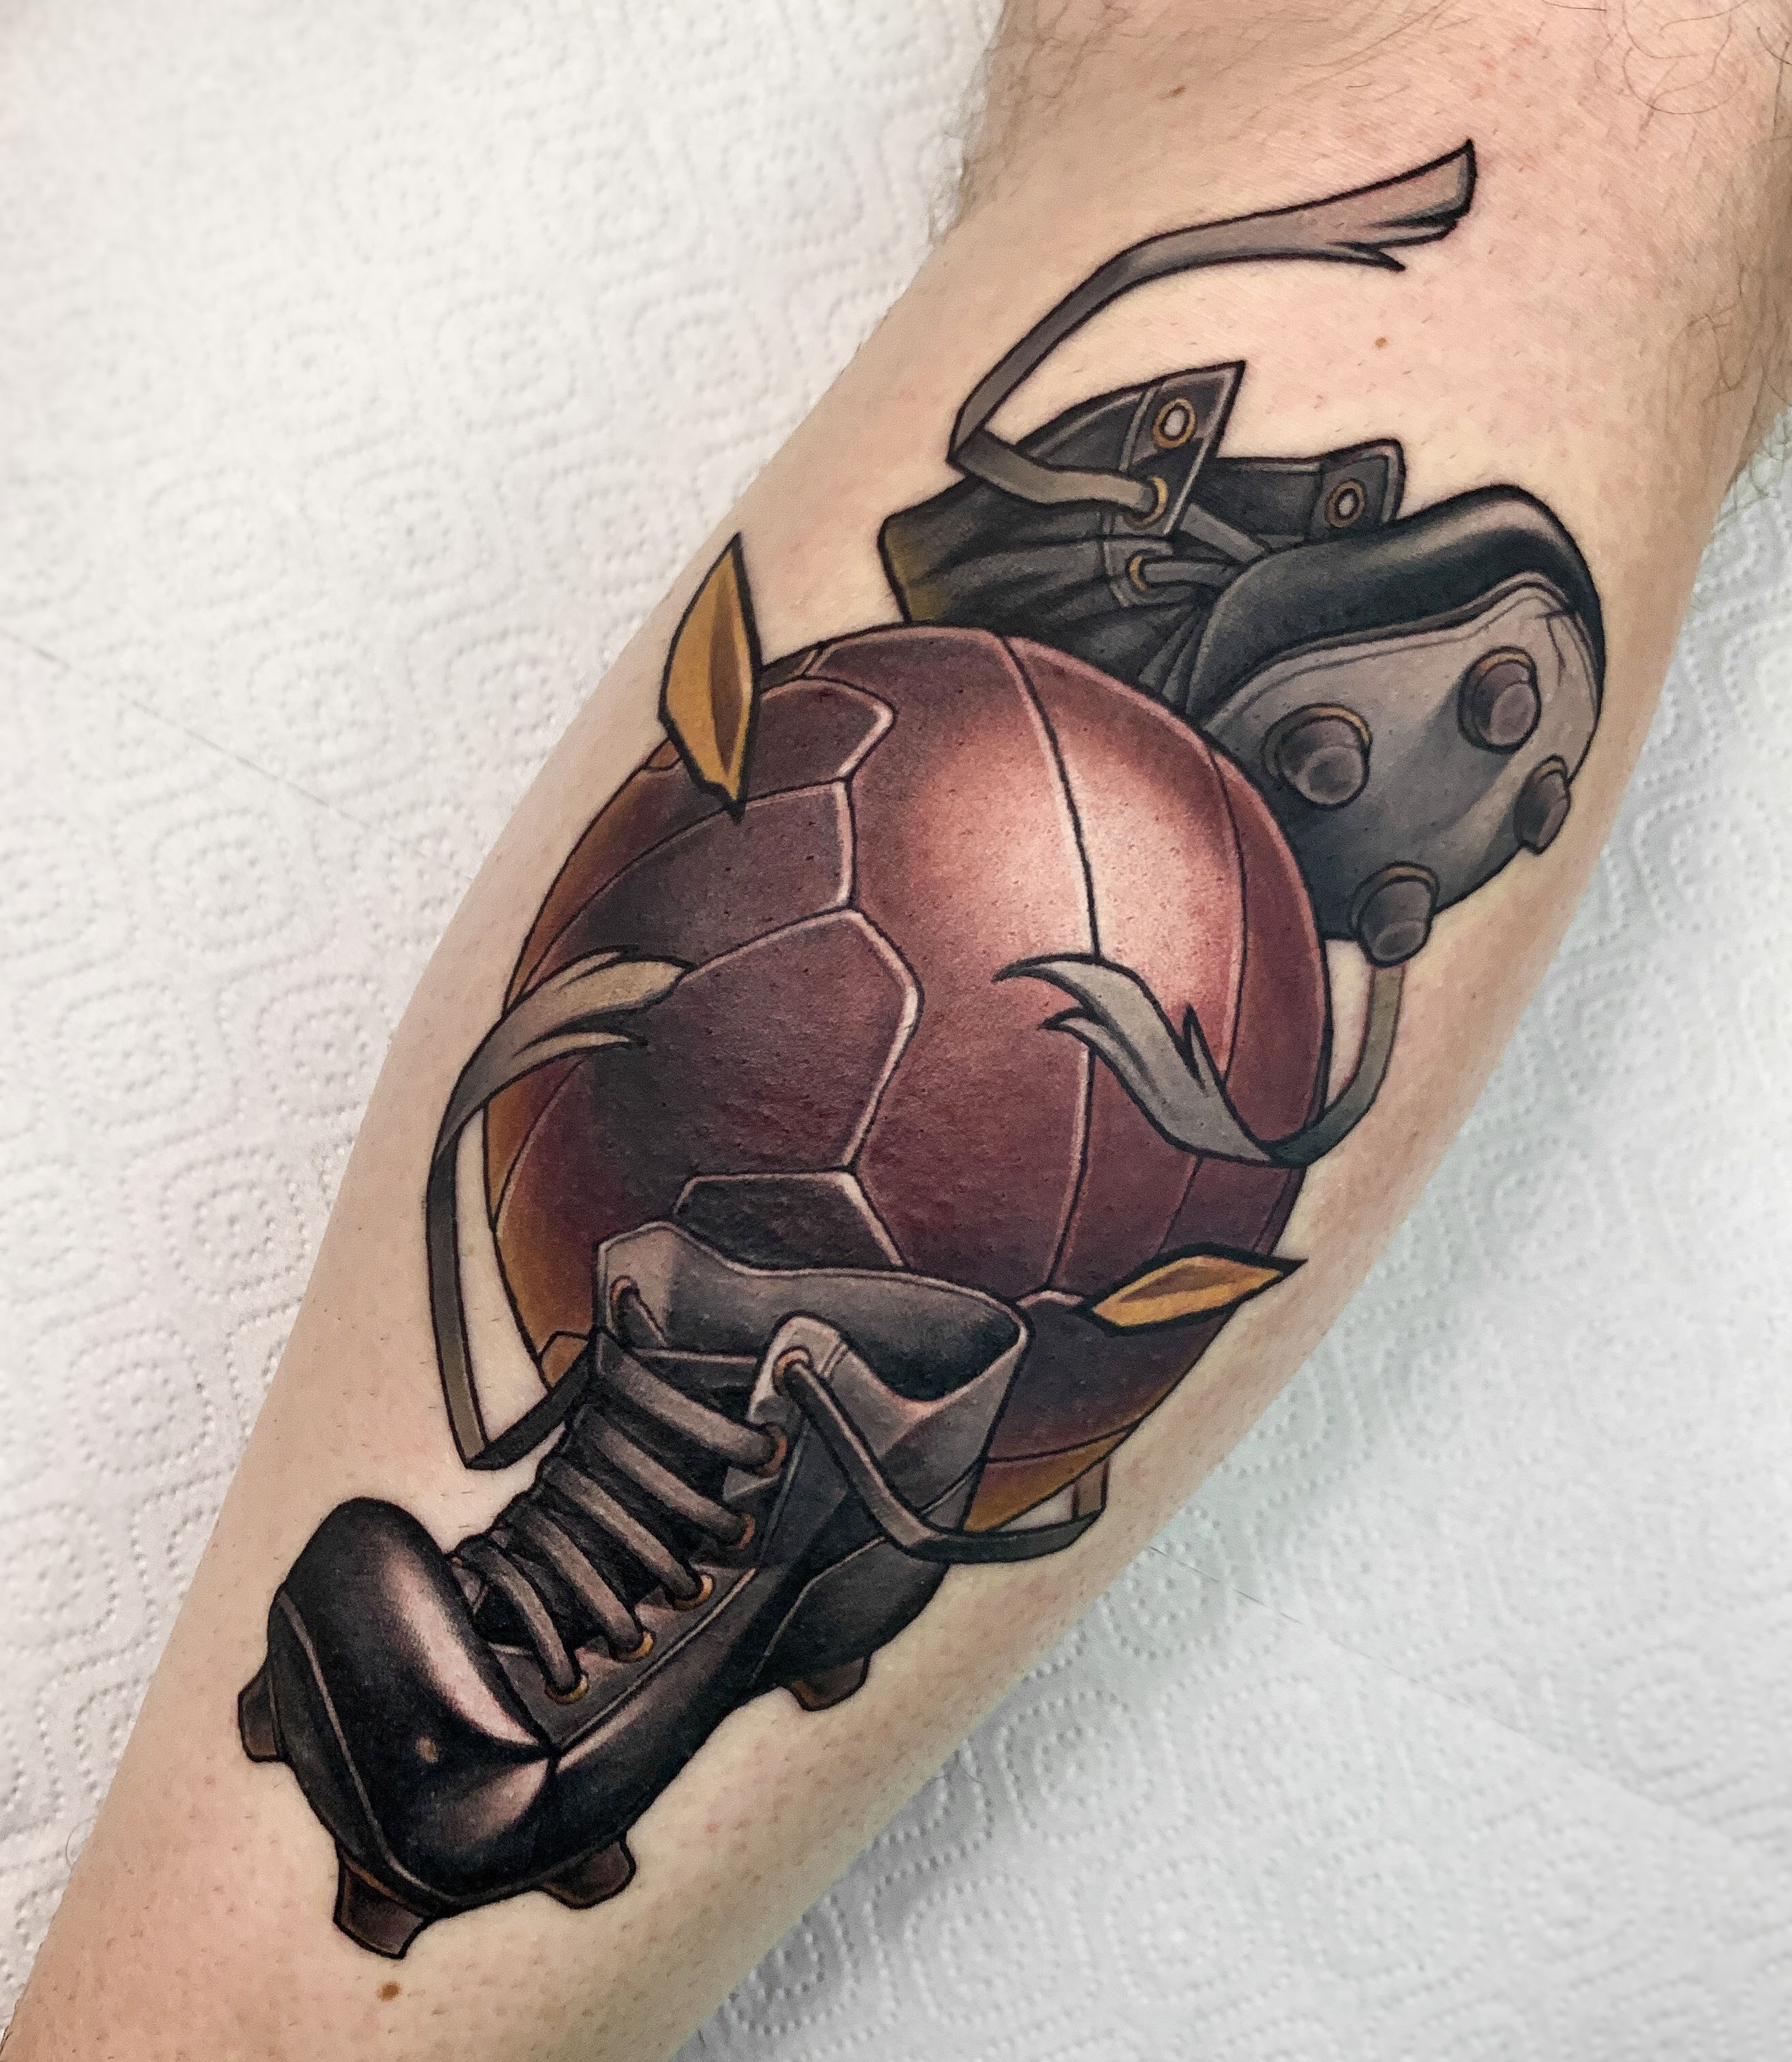 Football skin tear tattoo by ArtworkbyMatWard on DeviantArt